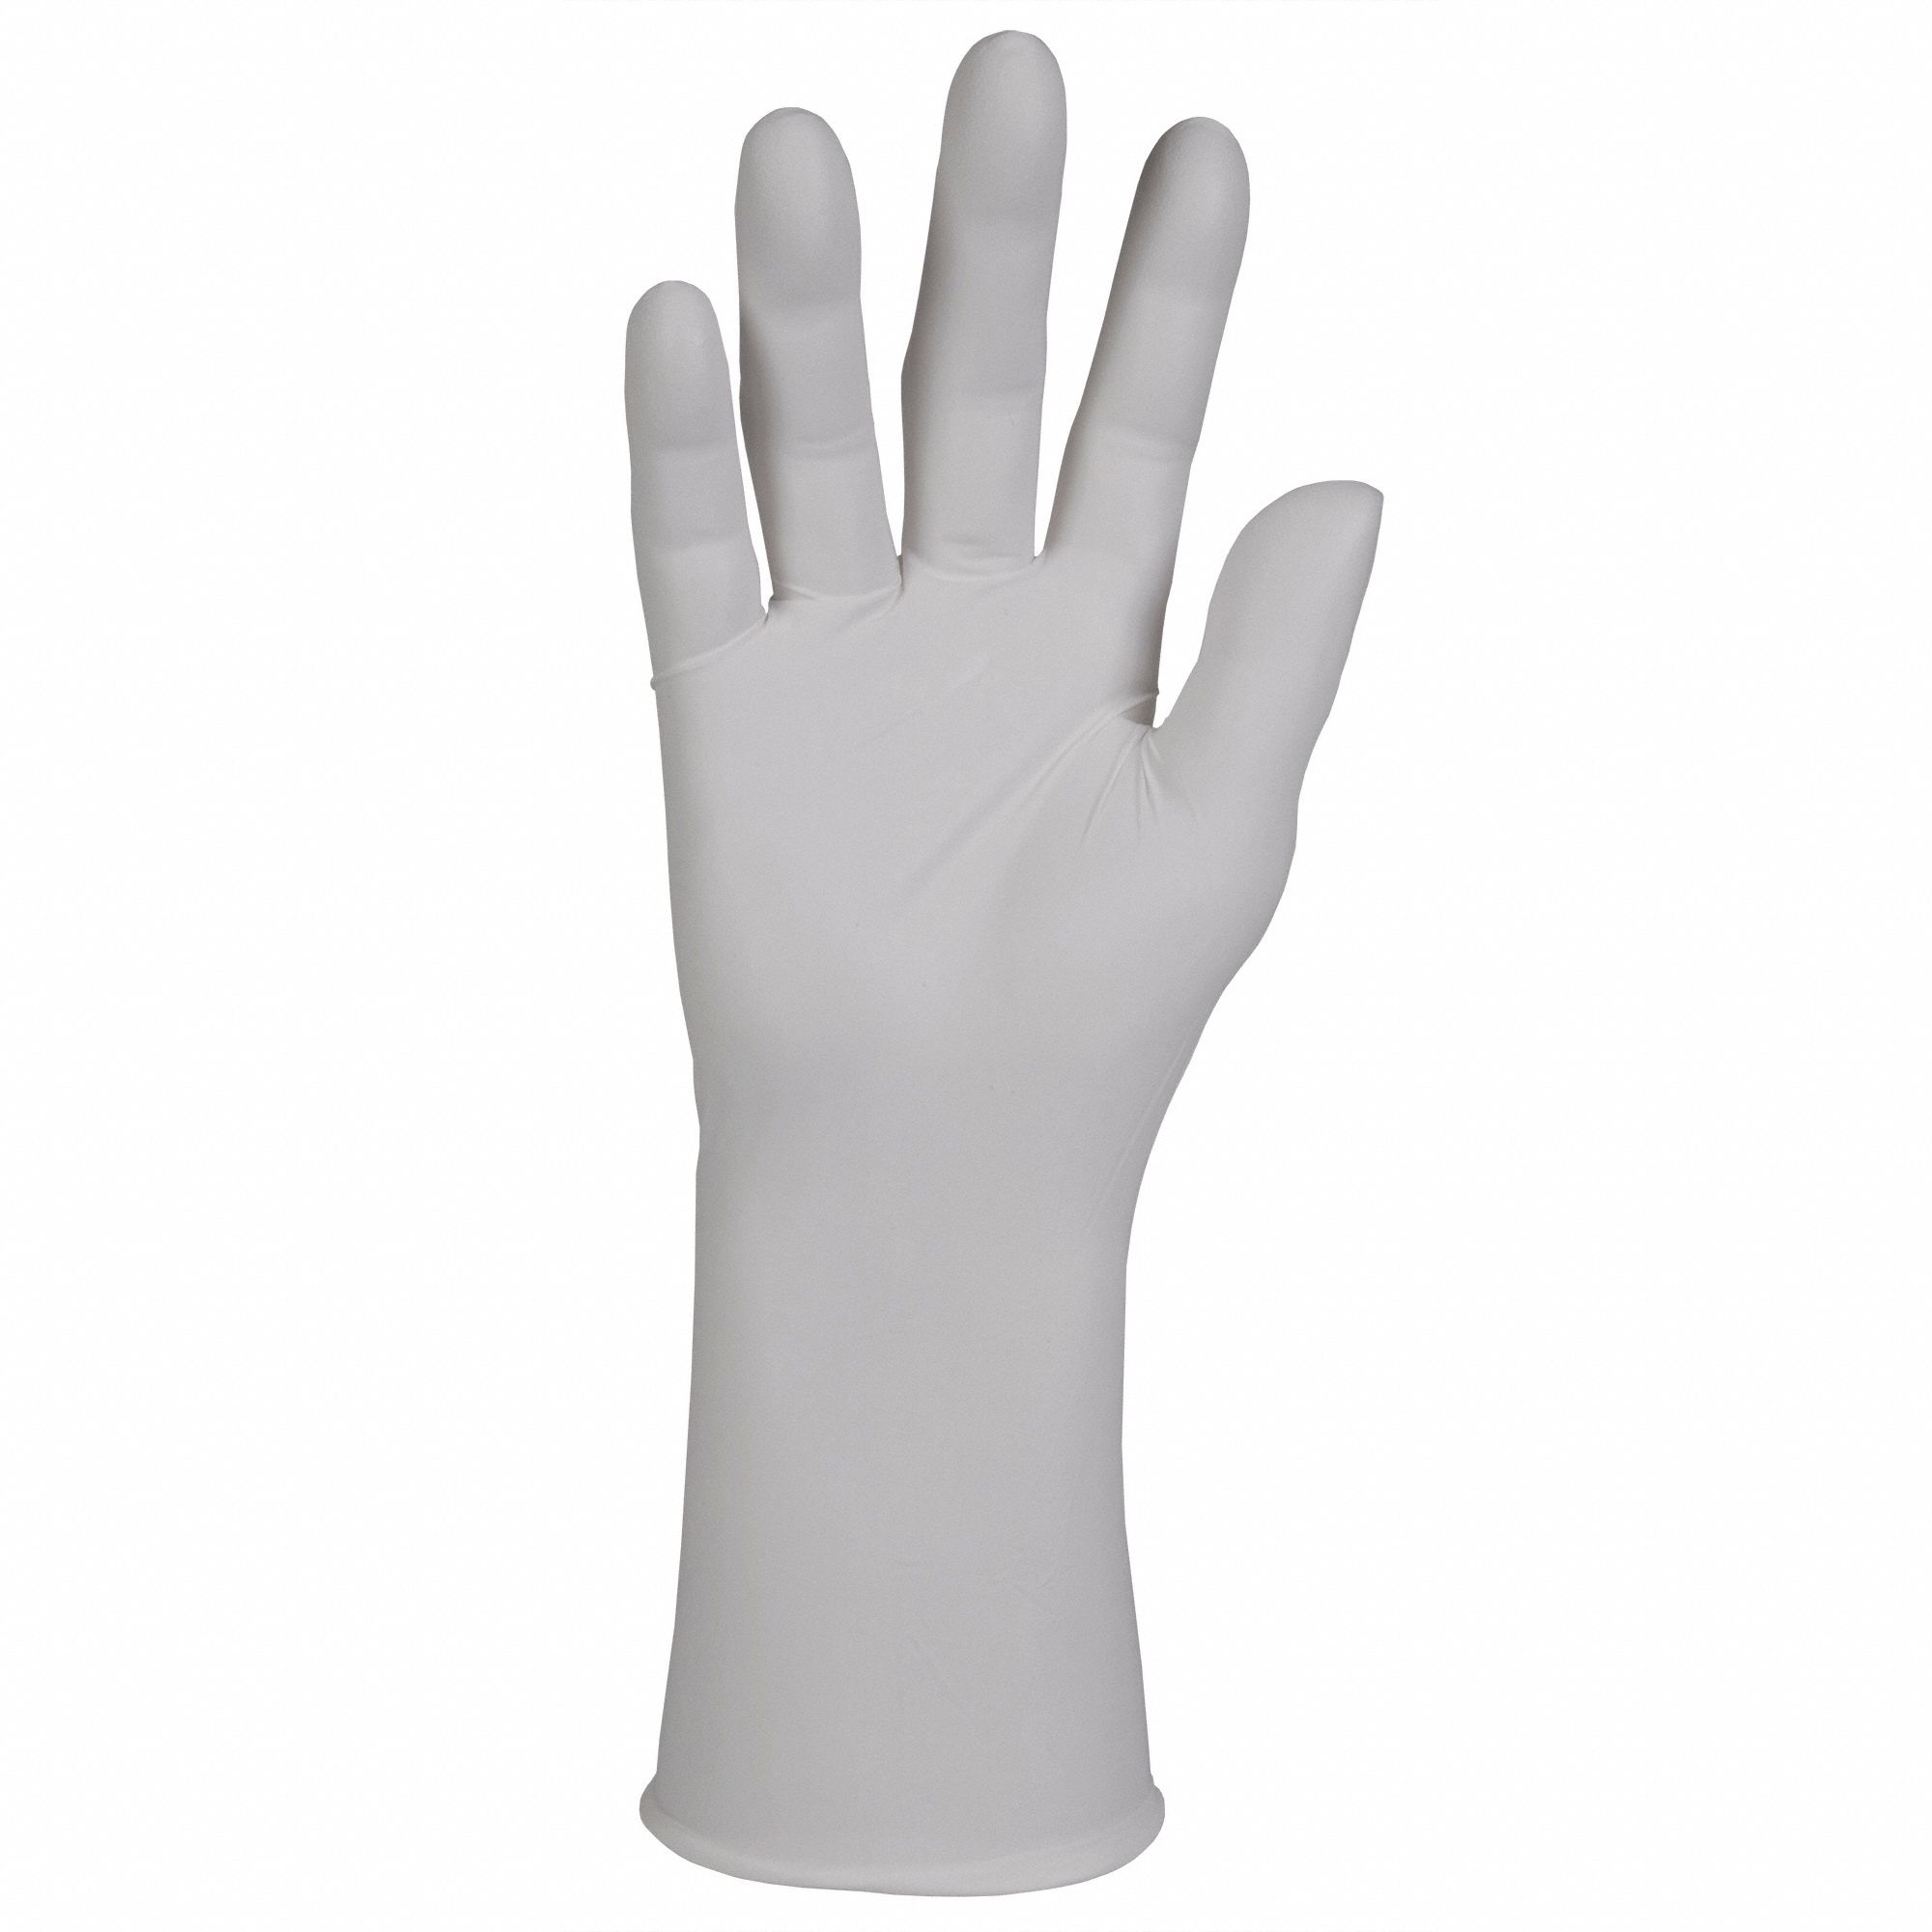 KIMBERLY-CLARK Disposable Glove: Food-Grade/Gen Purpose/Medical-Grade, S (  7 ), 4 mil, 1,000 PK